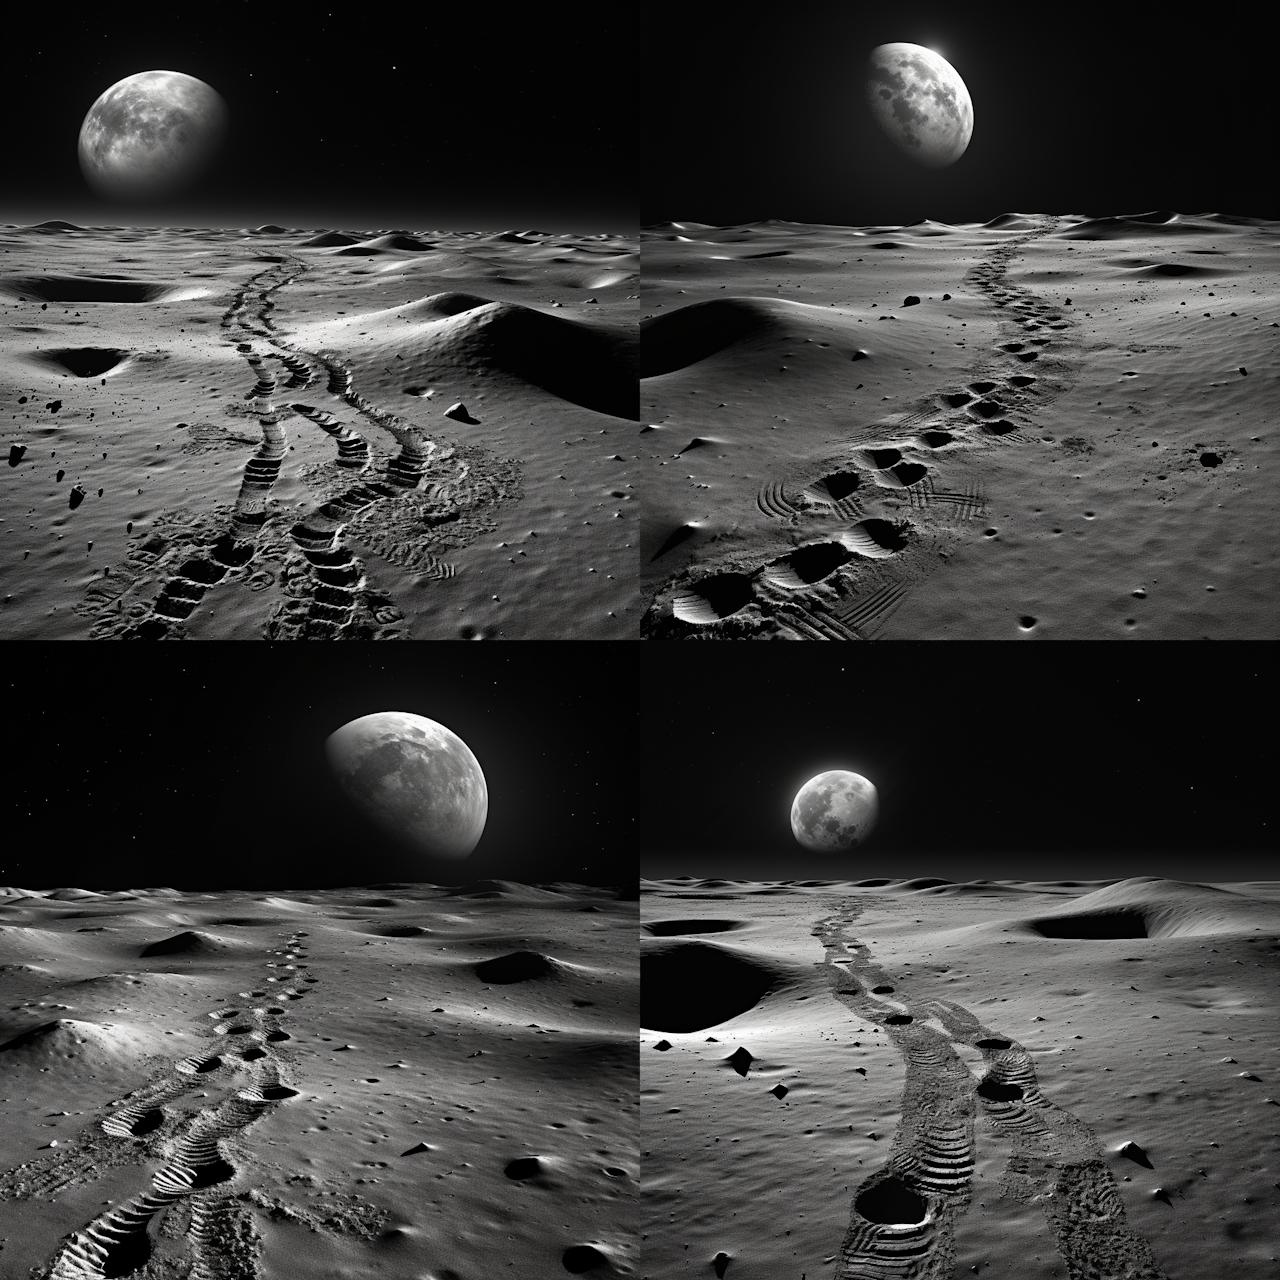 footprint on the moon 1